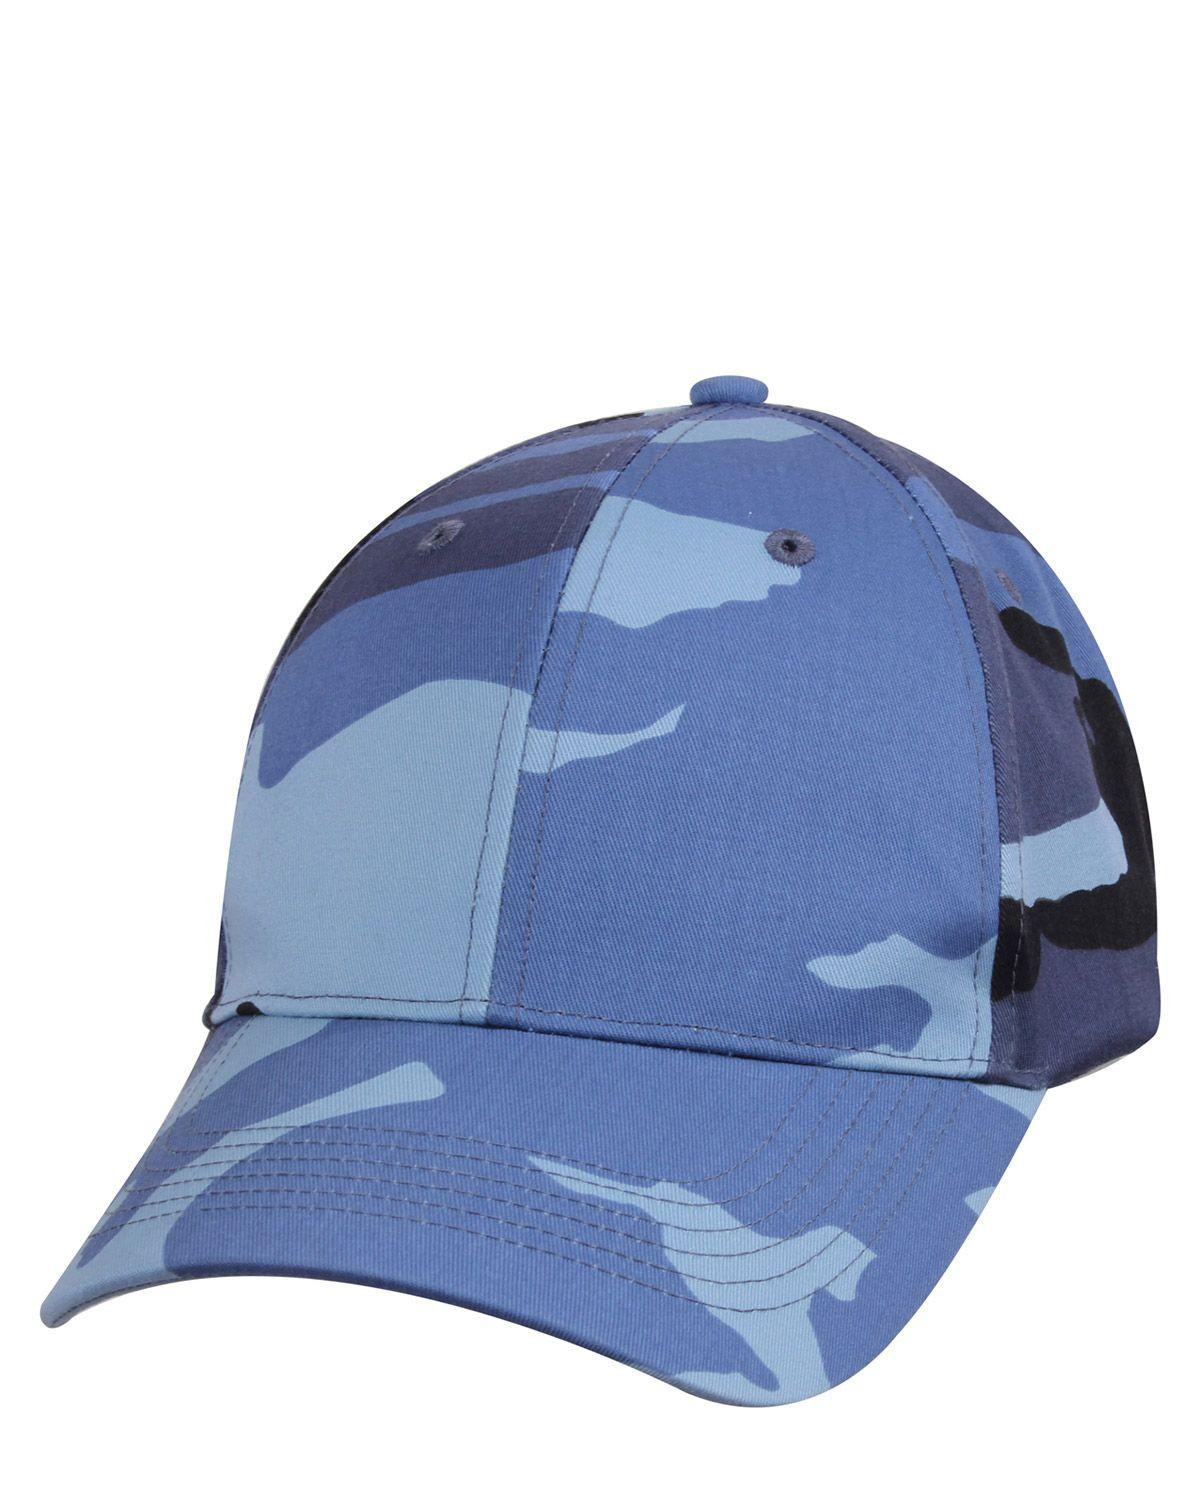 Rothco Supreme Low Profile Cap (Sky Blue Camo, One Size)